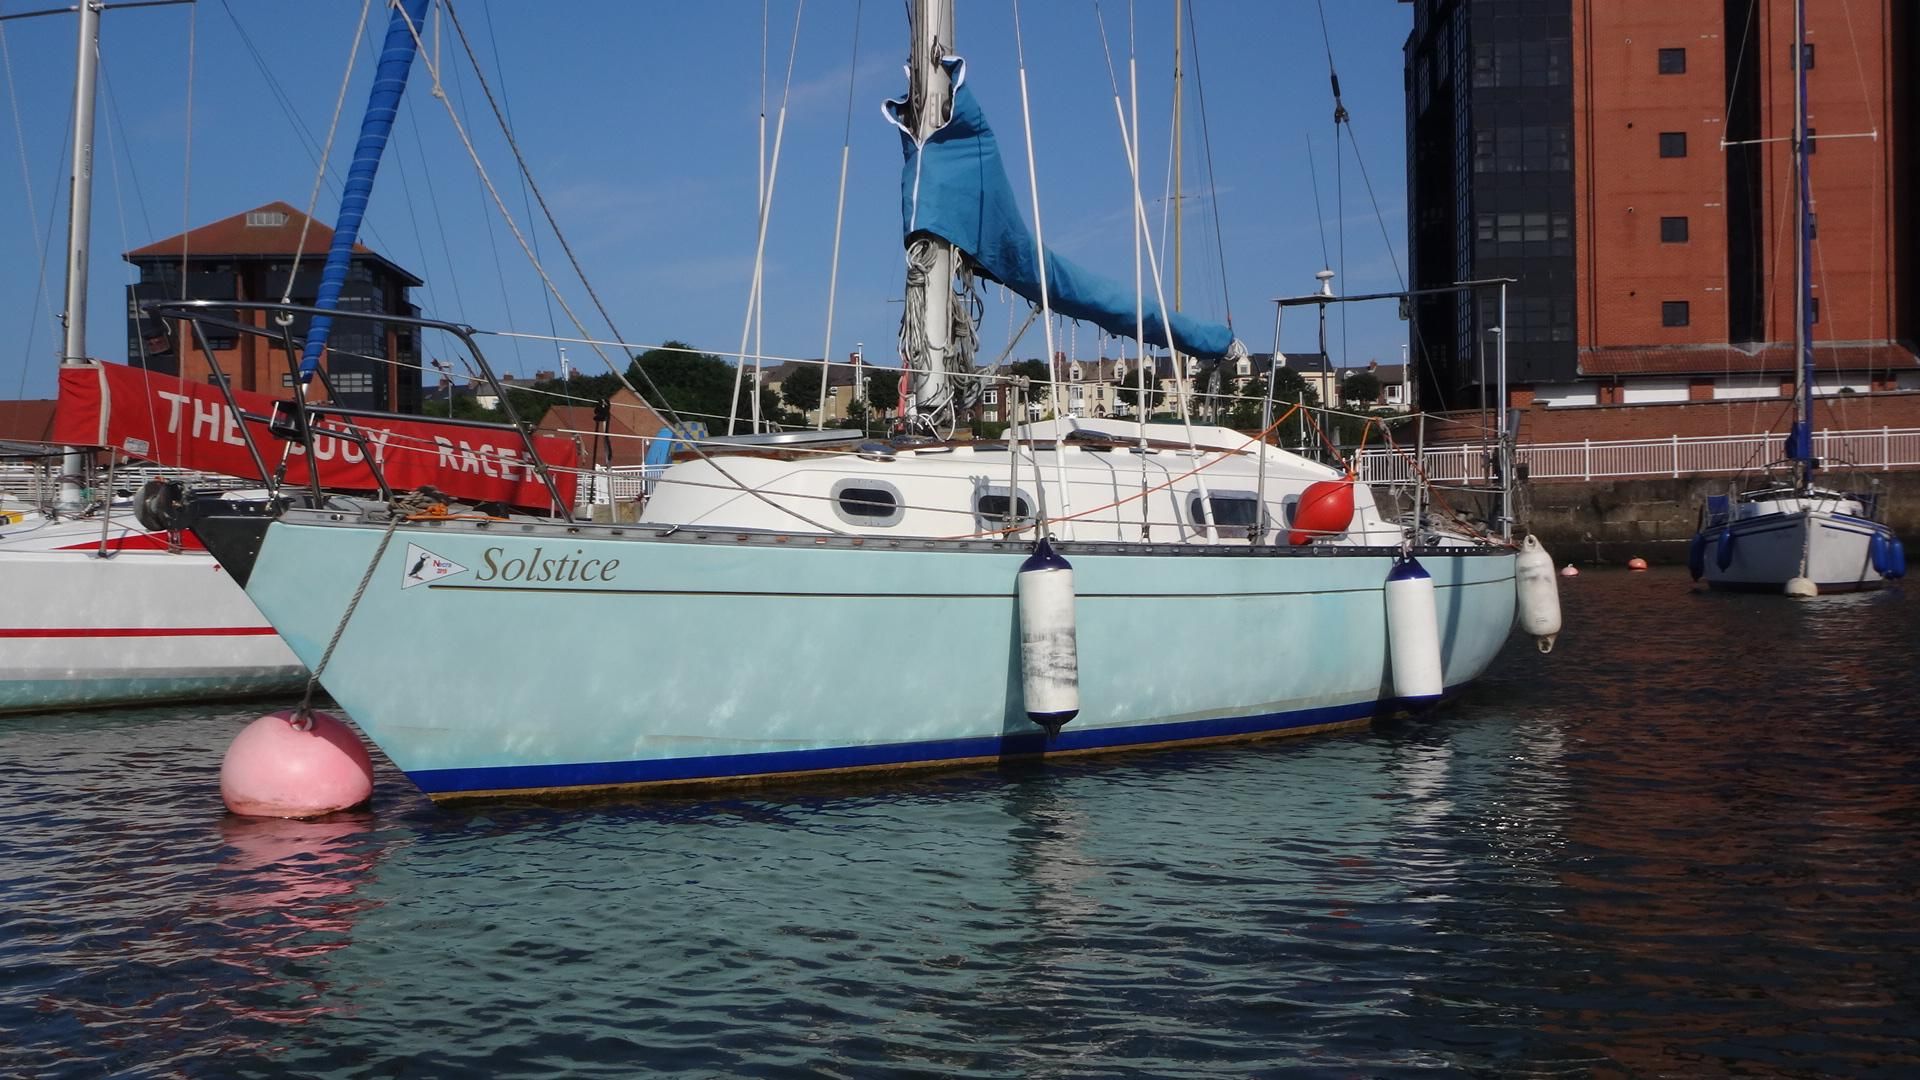 elizabethan yacht for sale uk